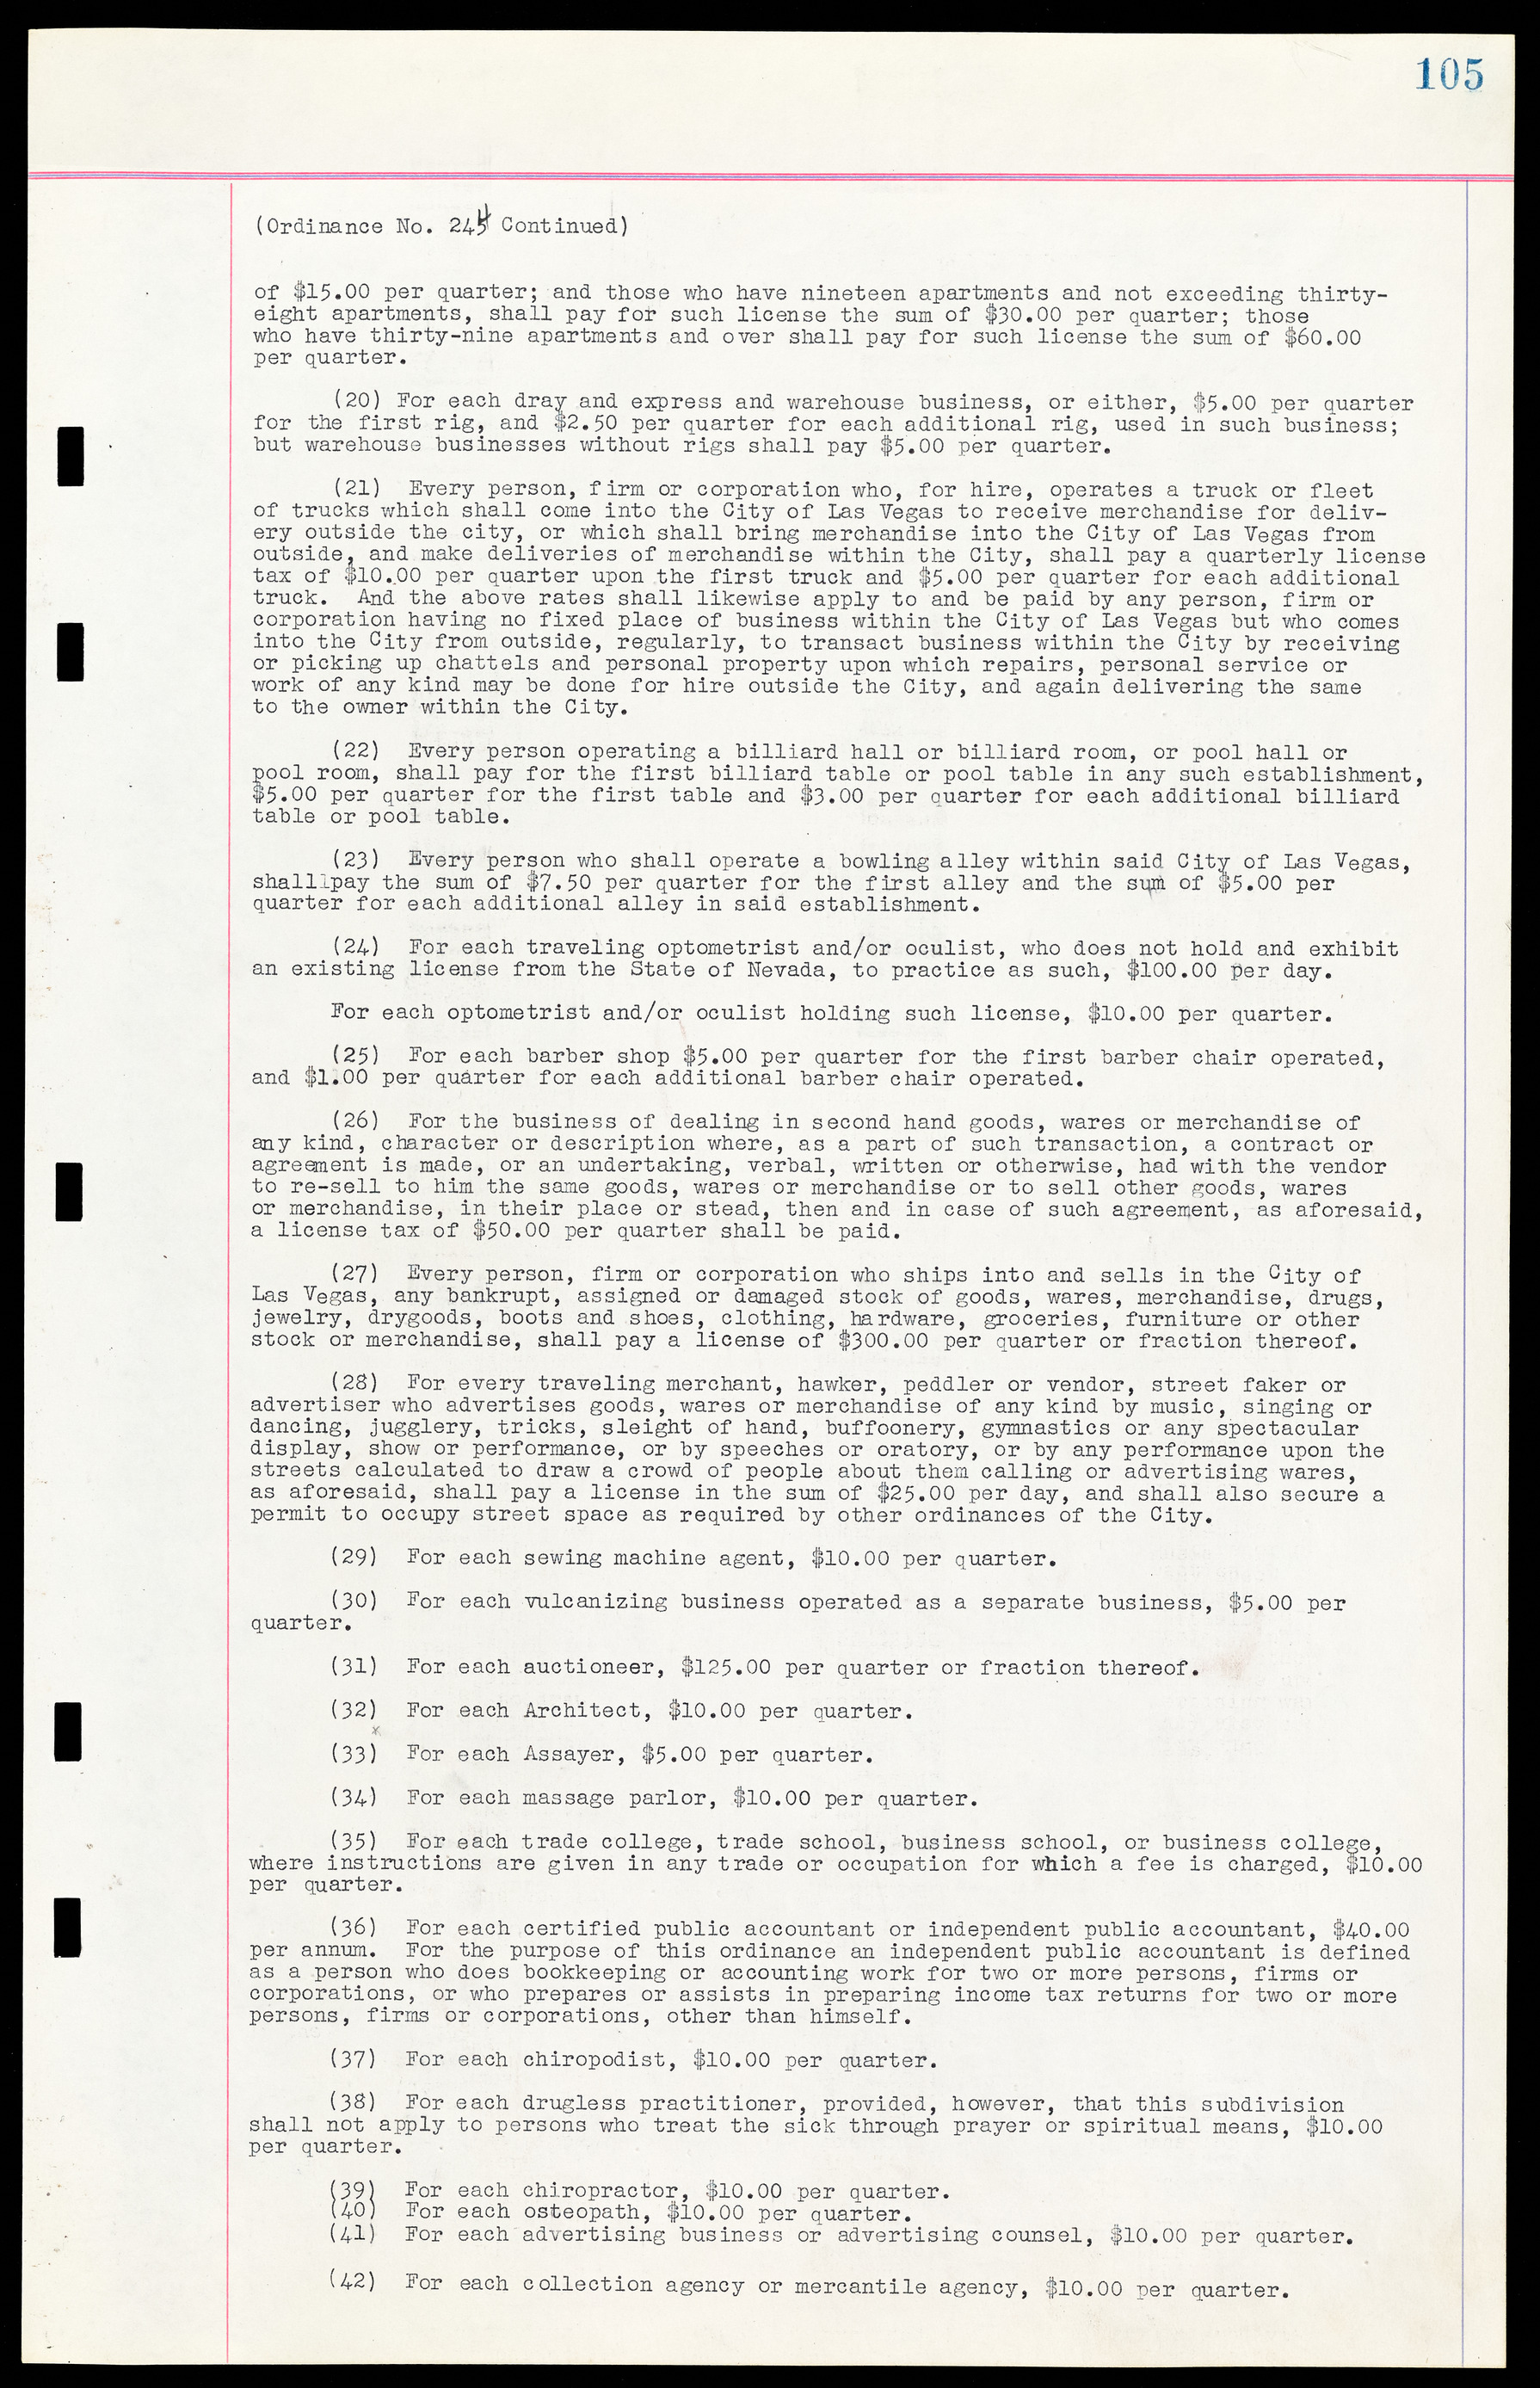 Las Vegas City Ordinances, March 31, 1933 to October 25, 1950, lvc000014-125